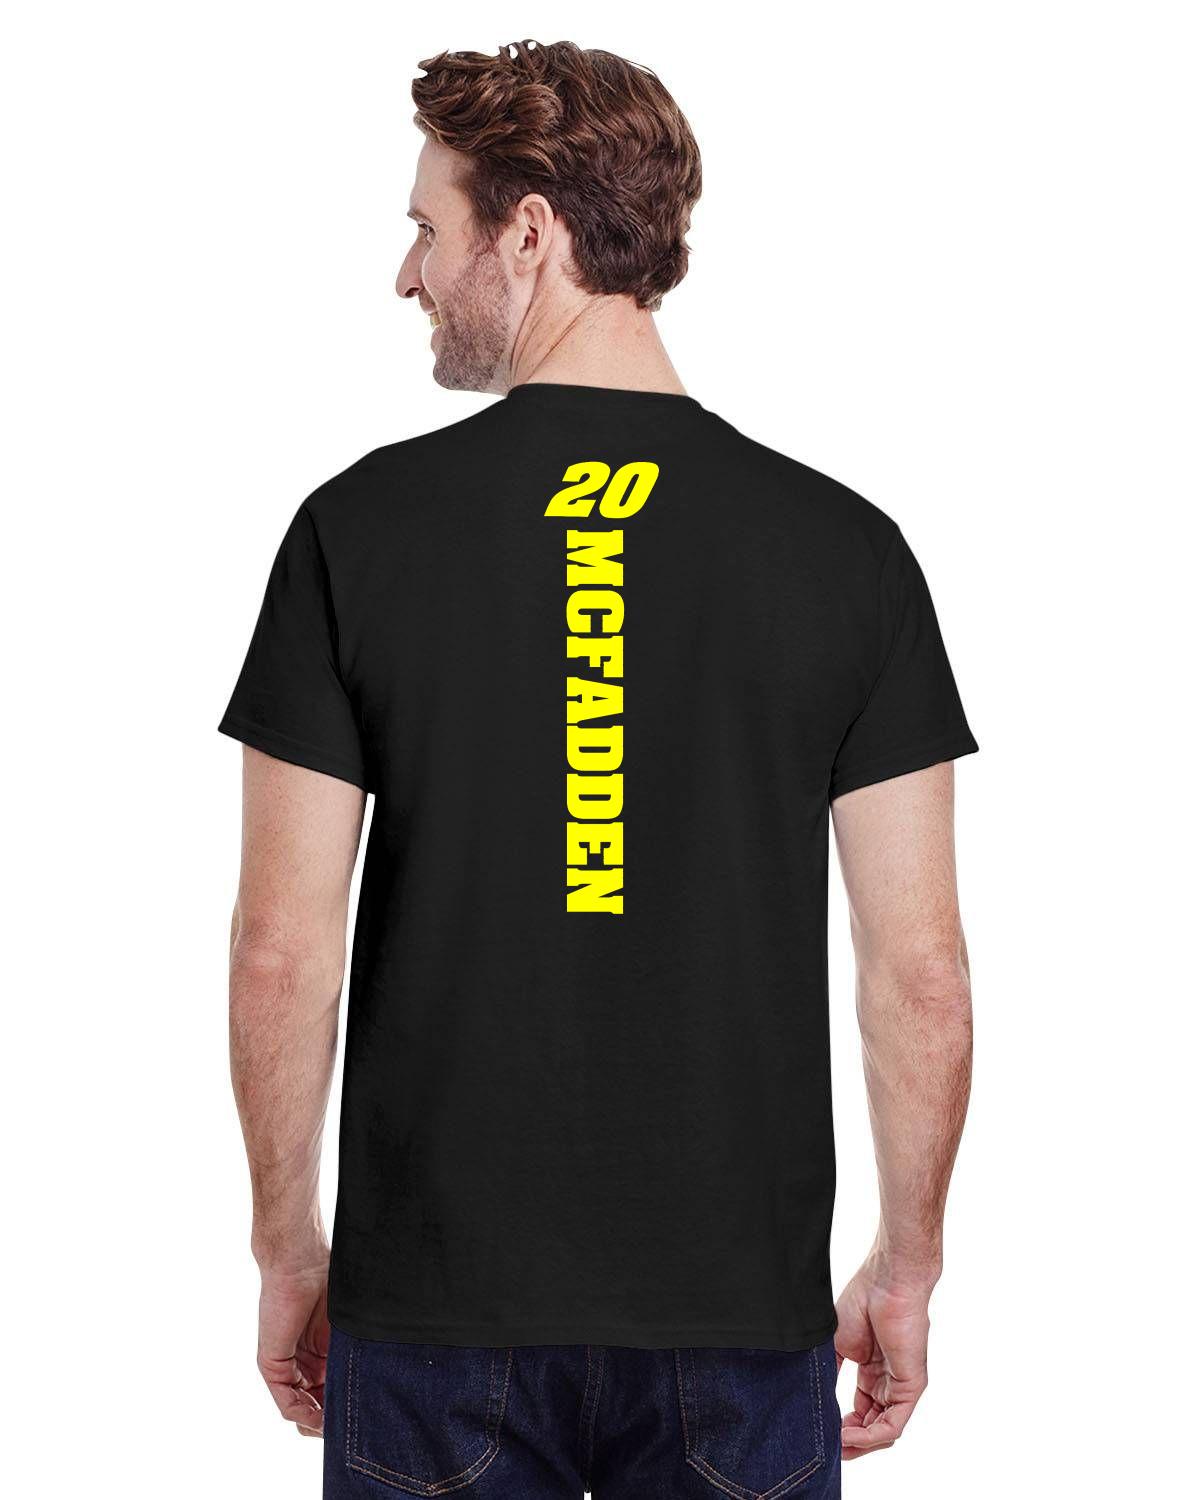 Cole McFadden / Grassroots Racing Name/number Men's tshirt